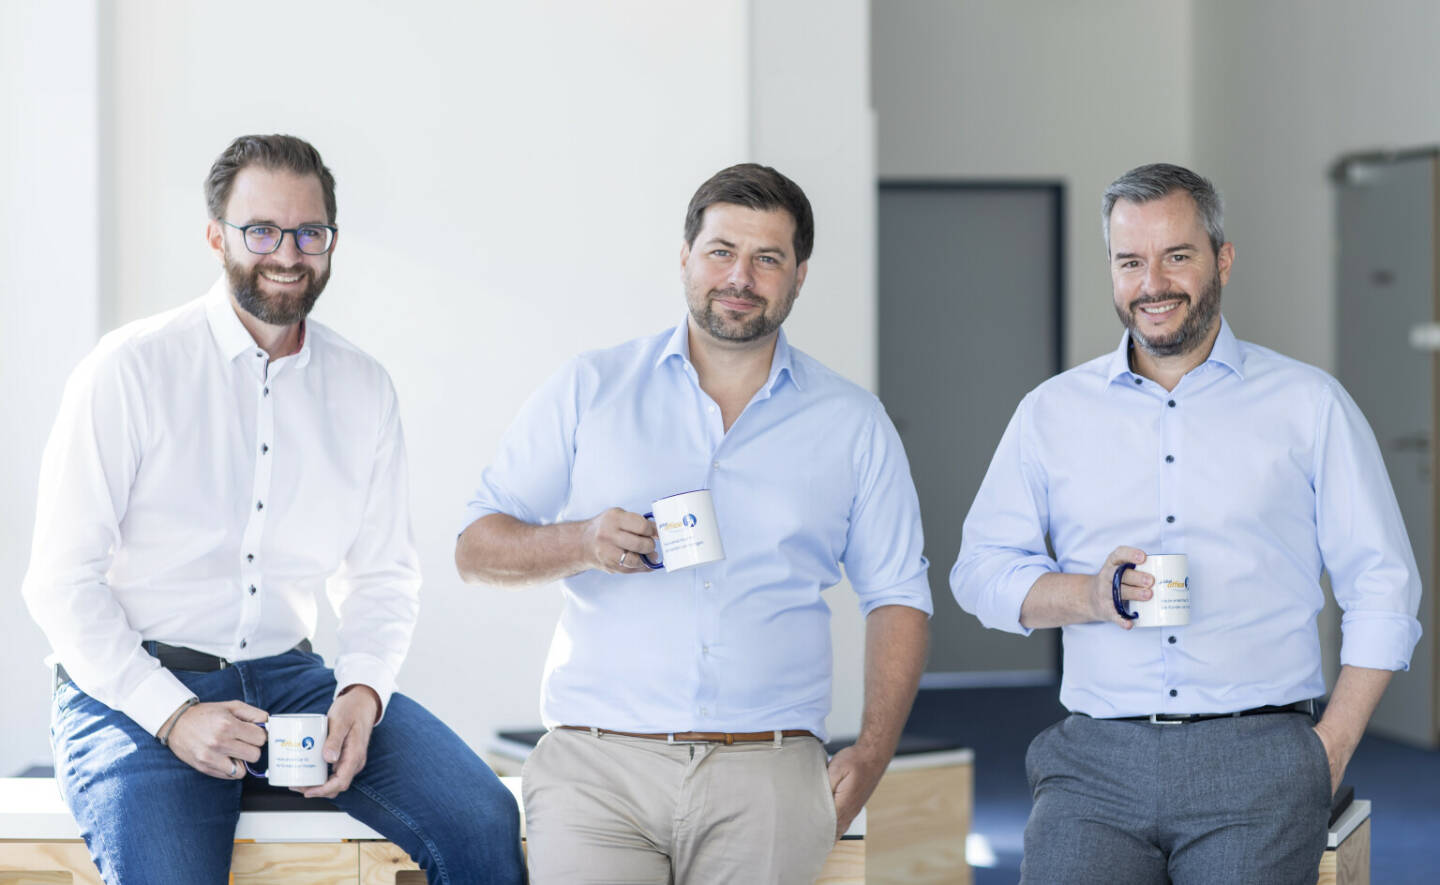 global office Franchise AT GmbH: 50 Arbeitsplätze: global office stockt kräftig auf, Geschäftsführung (von links): Stefan Vögele, Michael Bernhard, Josef Höchtl, Fotocredit: www.neumayr.cc